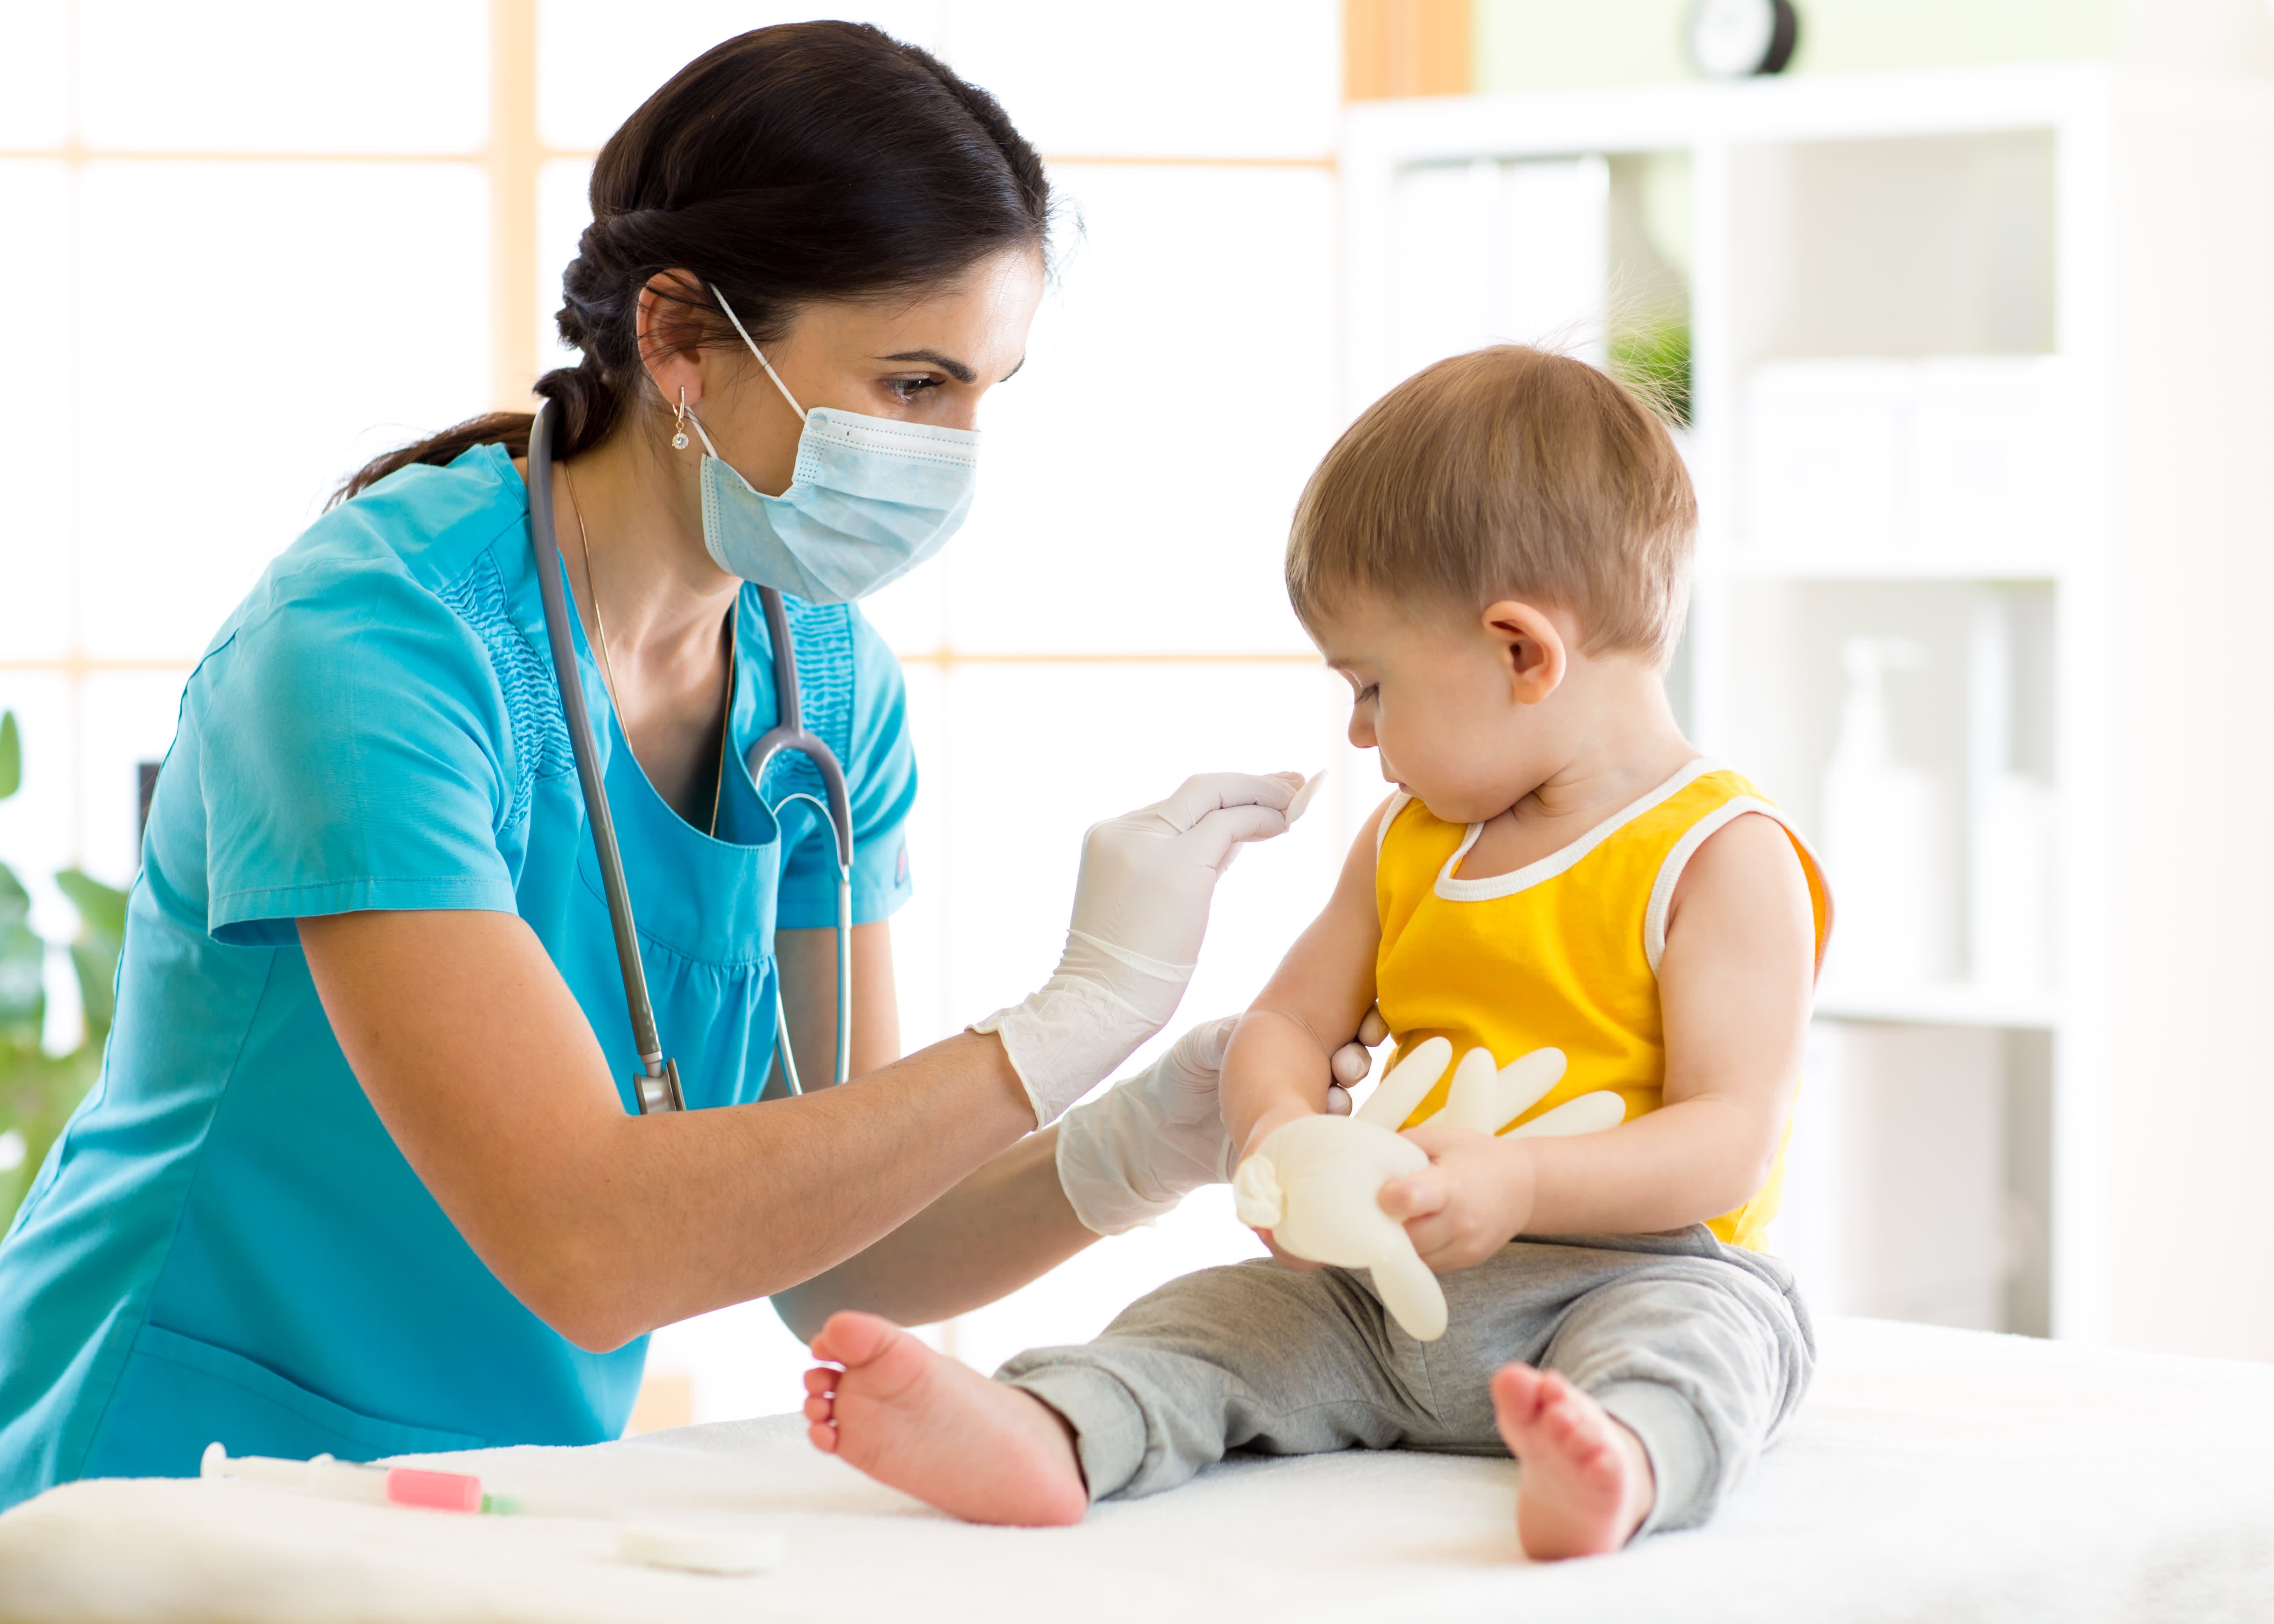 Медсестра вакциной. Вакцинация детей. Прививка детям. Иммунизация детей. Медсестра и ребенок.